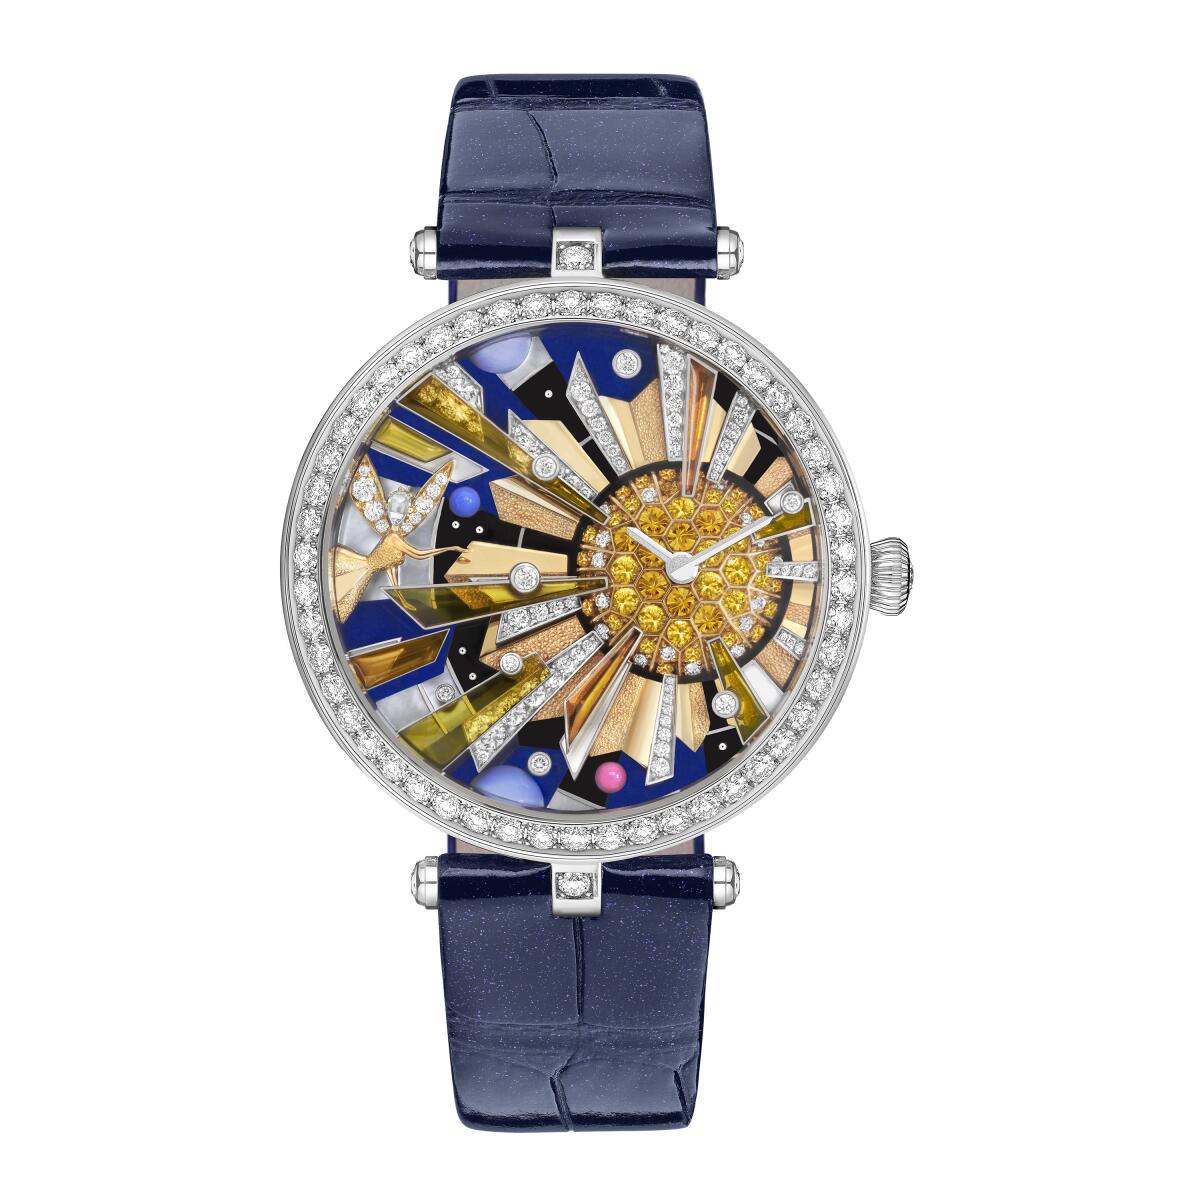 A photo of Van Cleef & Arpels' Lady Arpels Soleil Feerique 41mm timepiece.